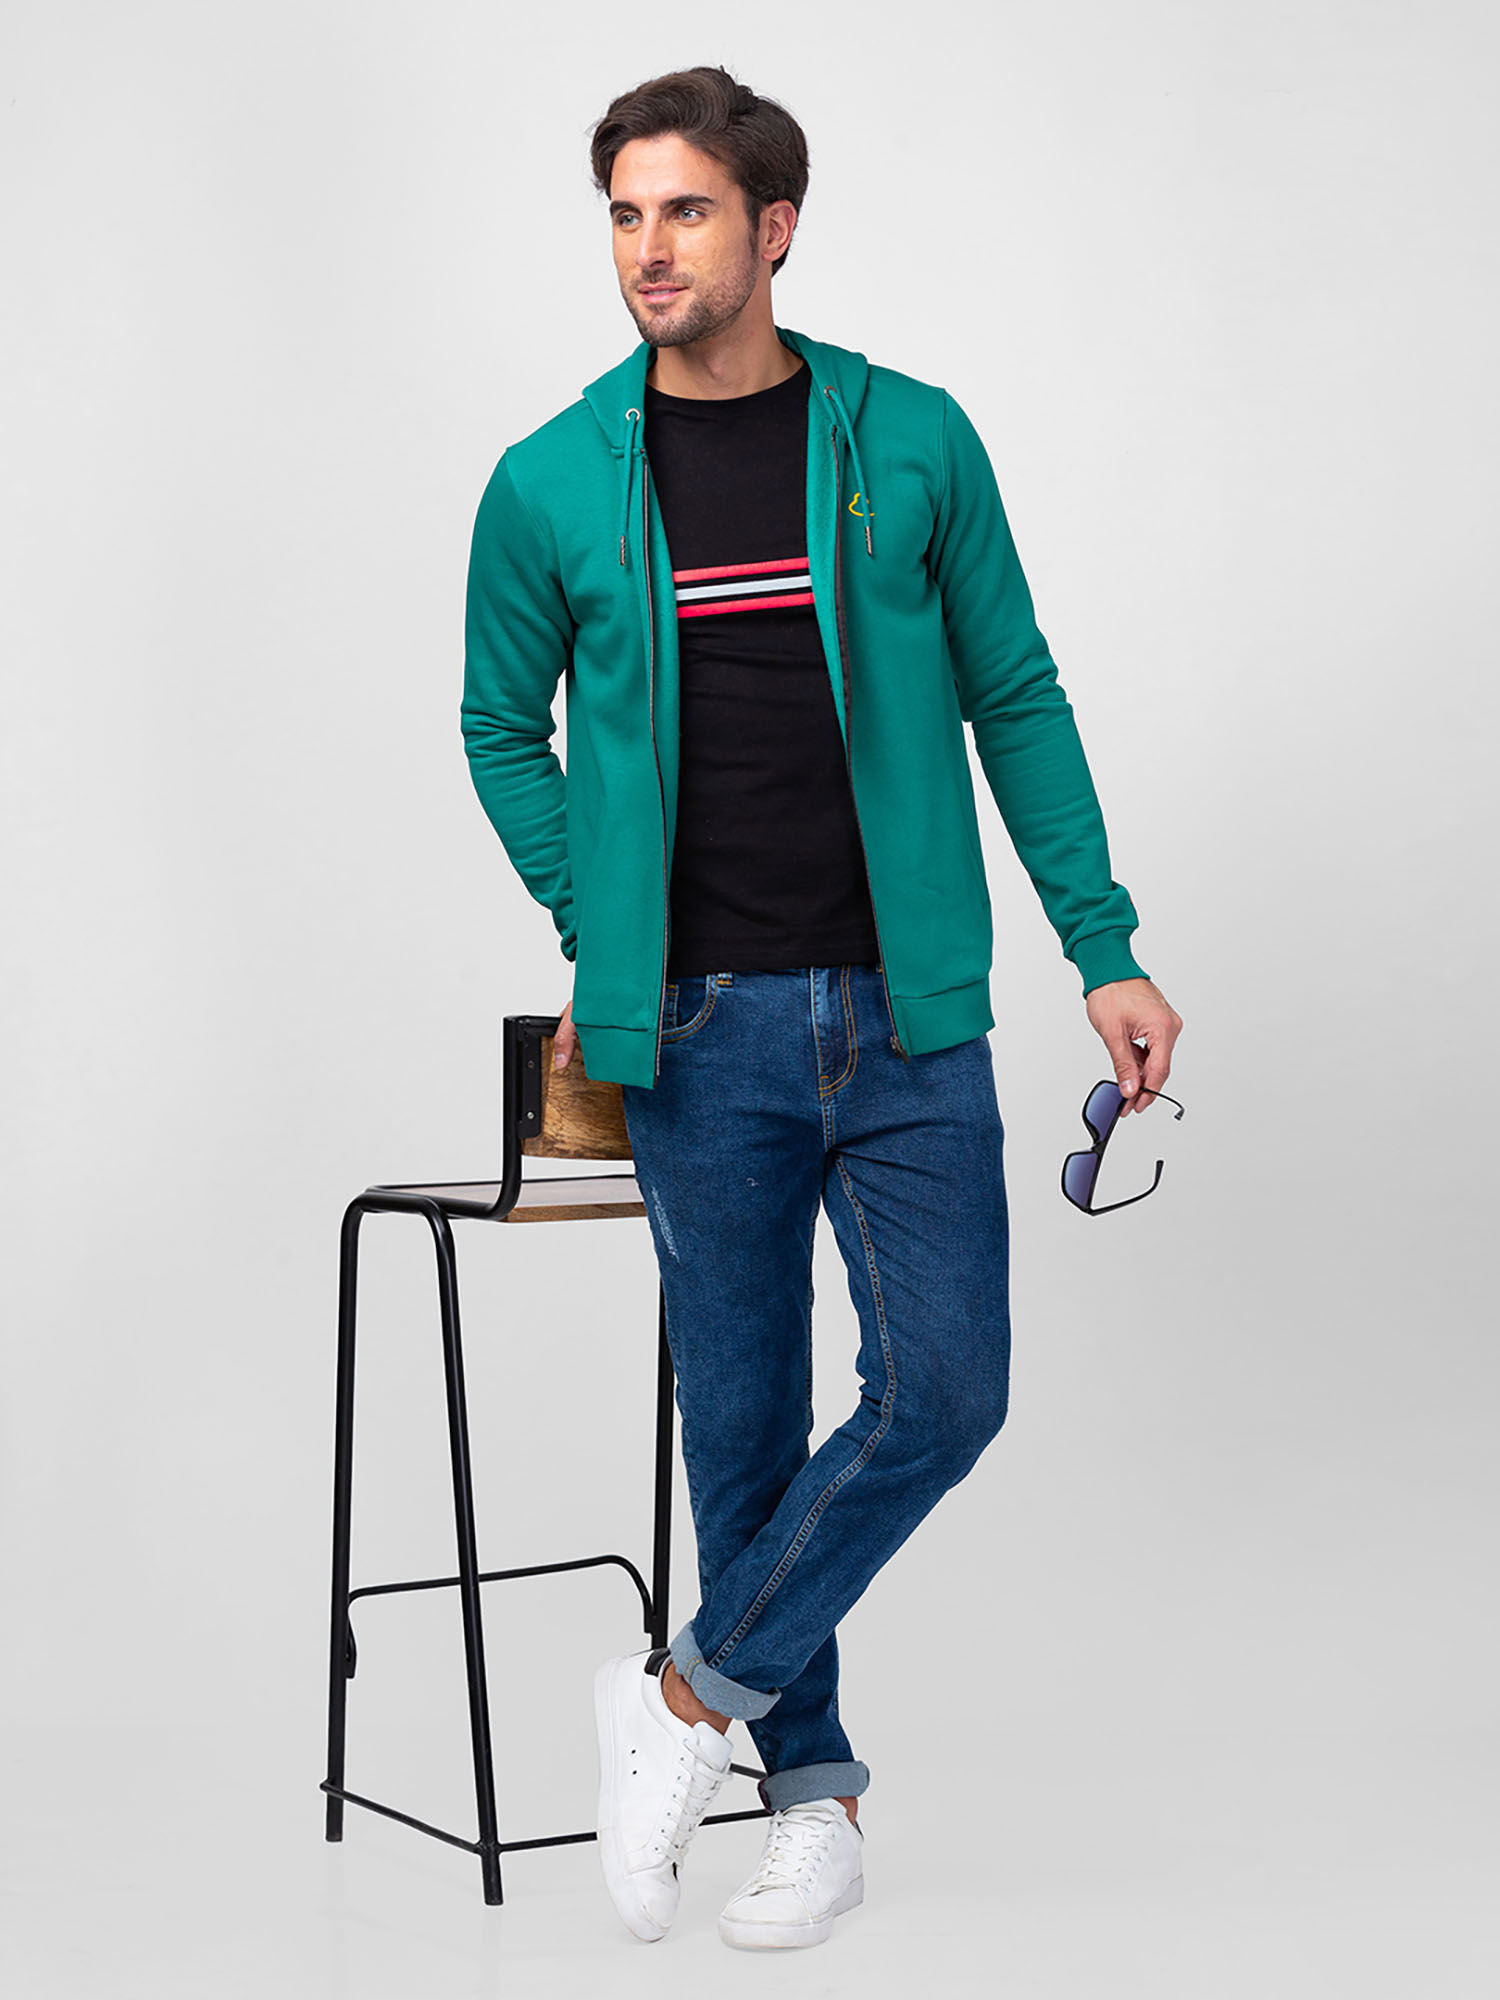 Buy Being Human Men Full Sleeve Jackets (Size: M)-BHJI22553-BLACK at  Amazon.in